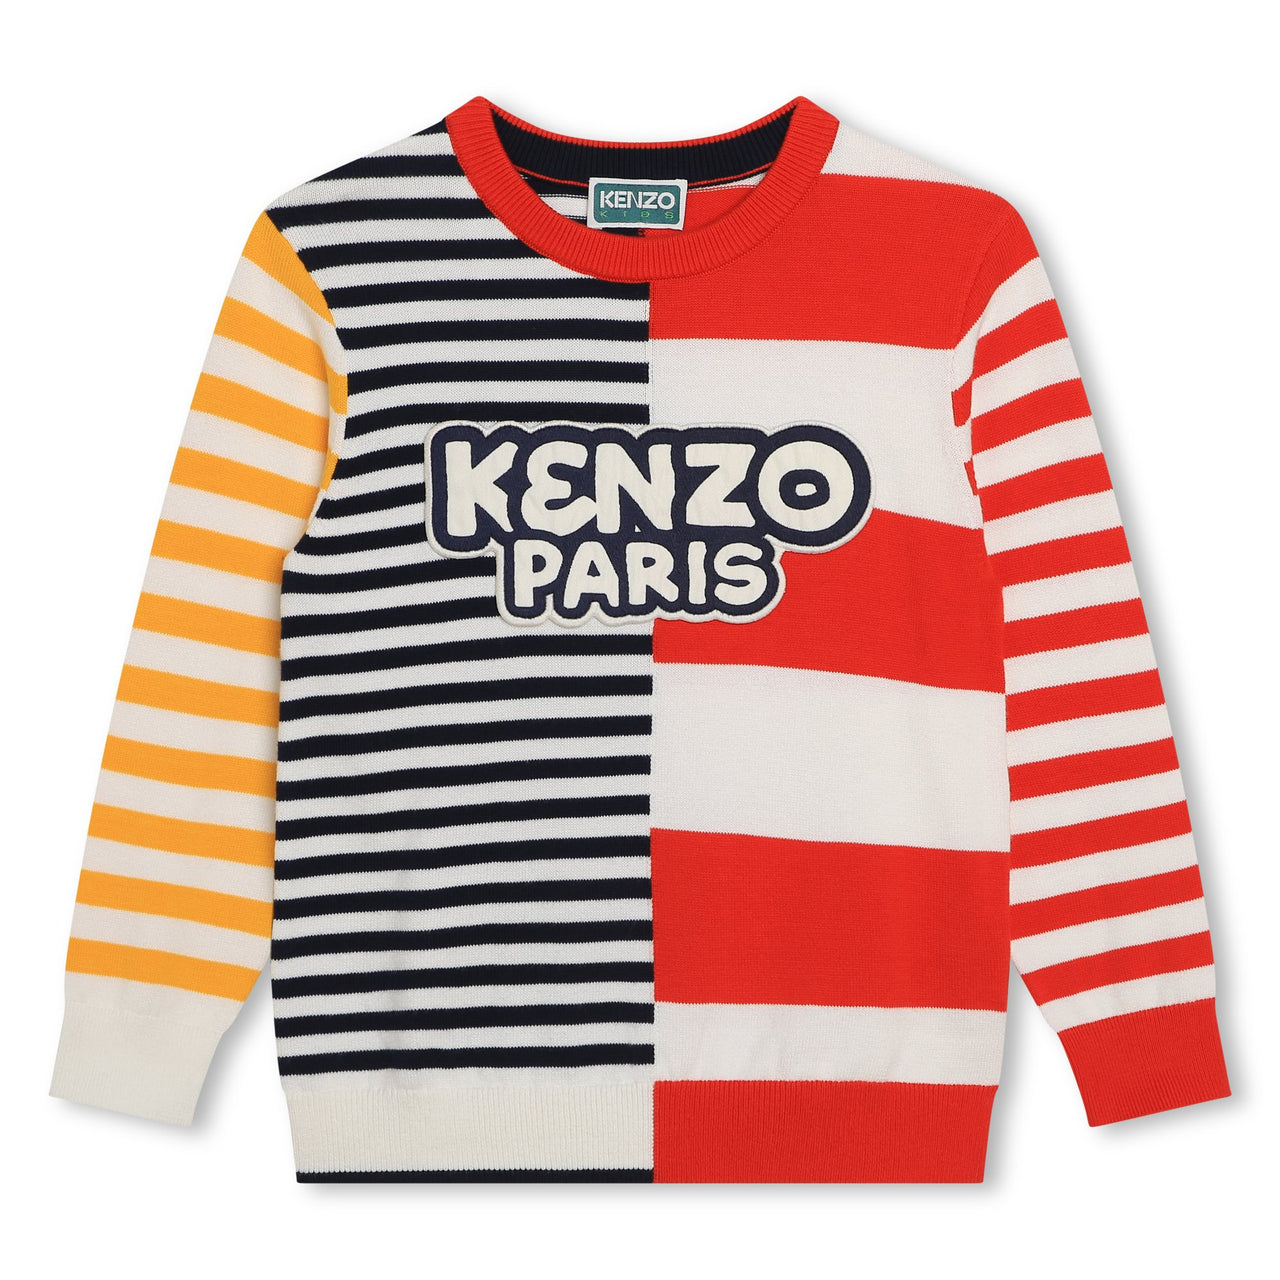 Sudadera o sweter para niño y teens Kenzo